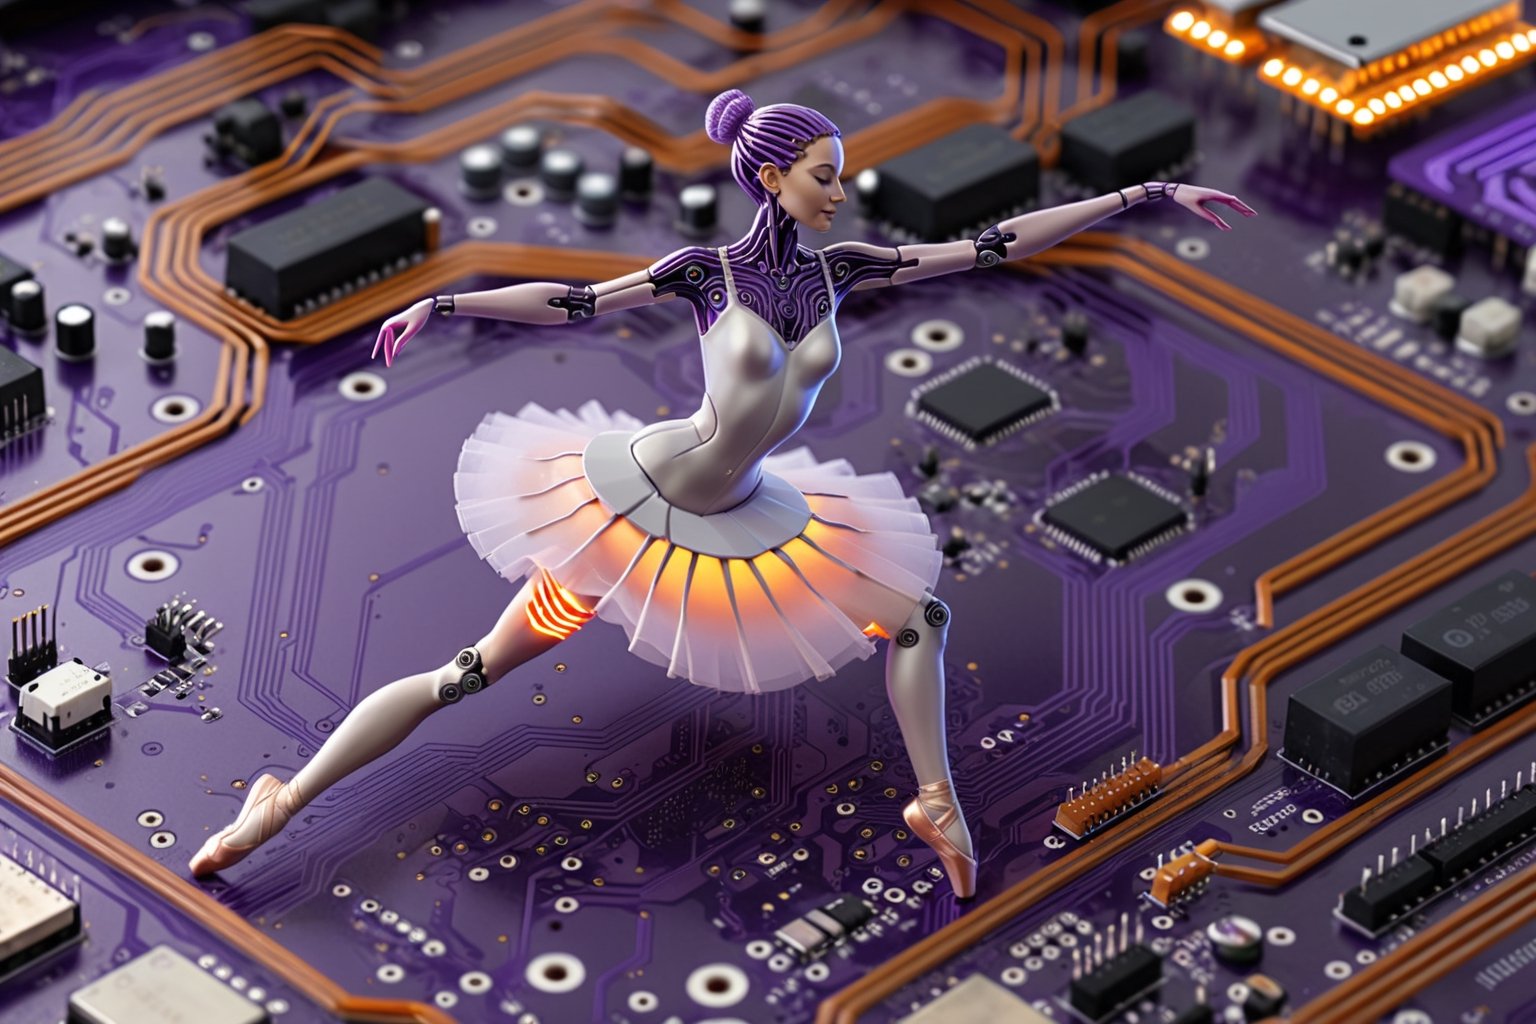 3l3ctronics, a hyper realistic long shot of (((a dancing ballerina cyborg merged into PCB traces))), capistors, transitors and resistors, bokeh purple and orange PCB backdrop